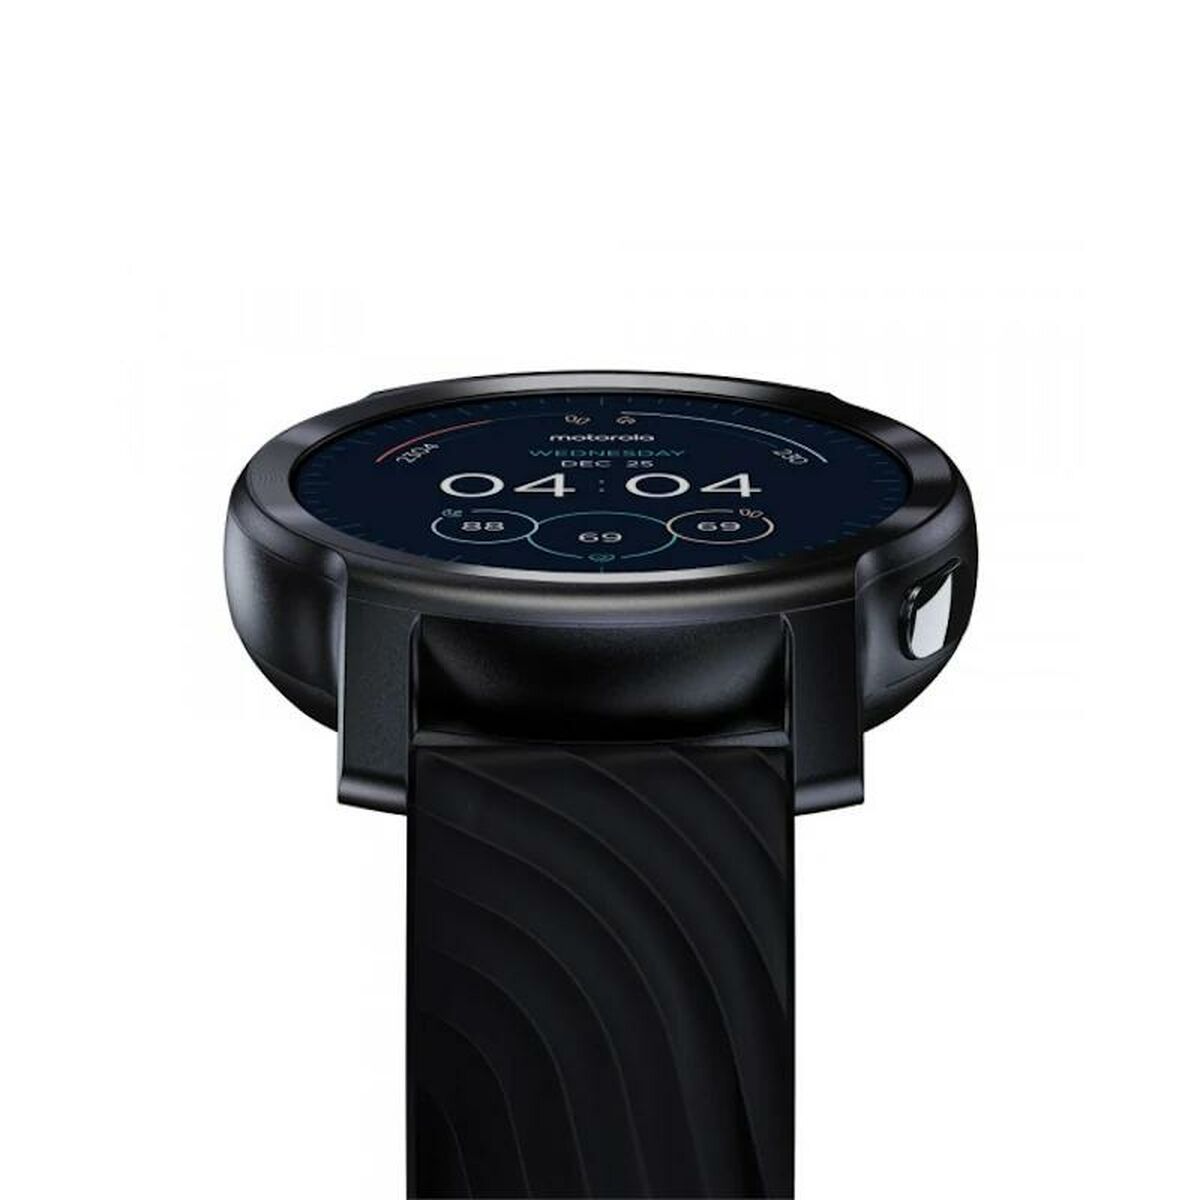 Smartwatch Motorola Watch 100 1,3" 5 atm 355 mAh Black (Refurbished A)